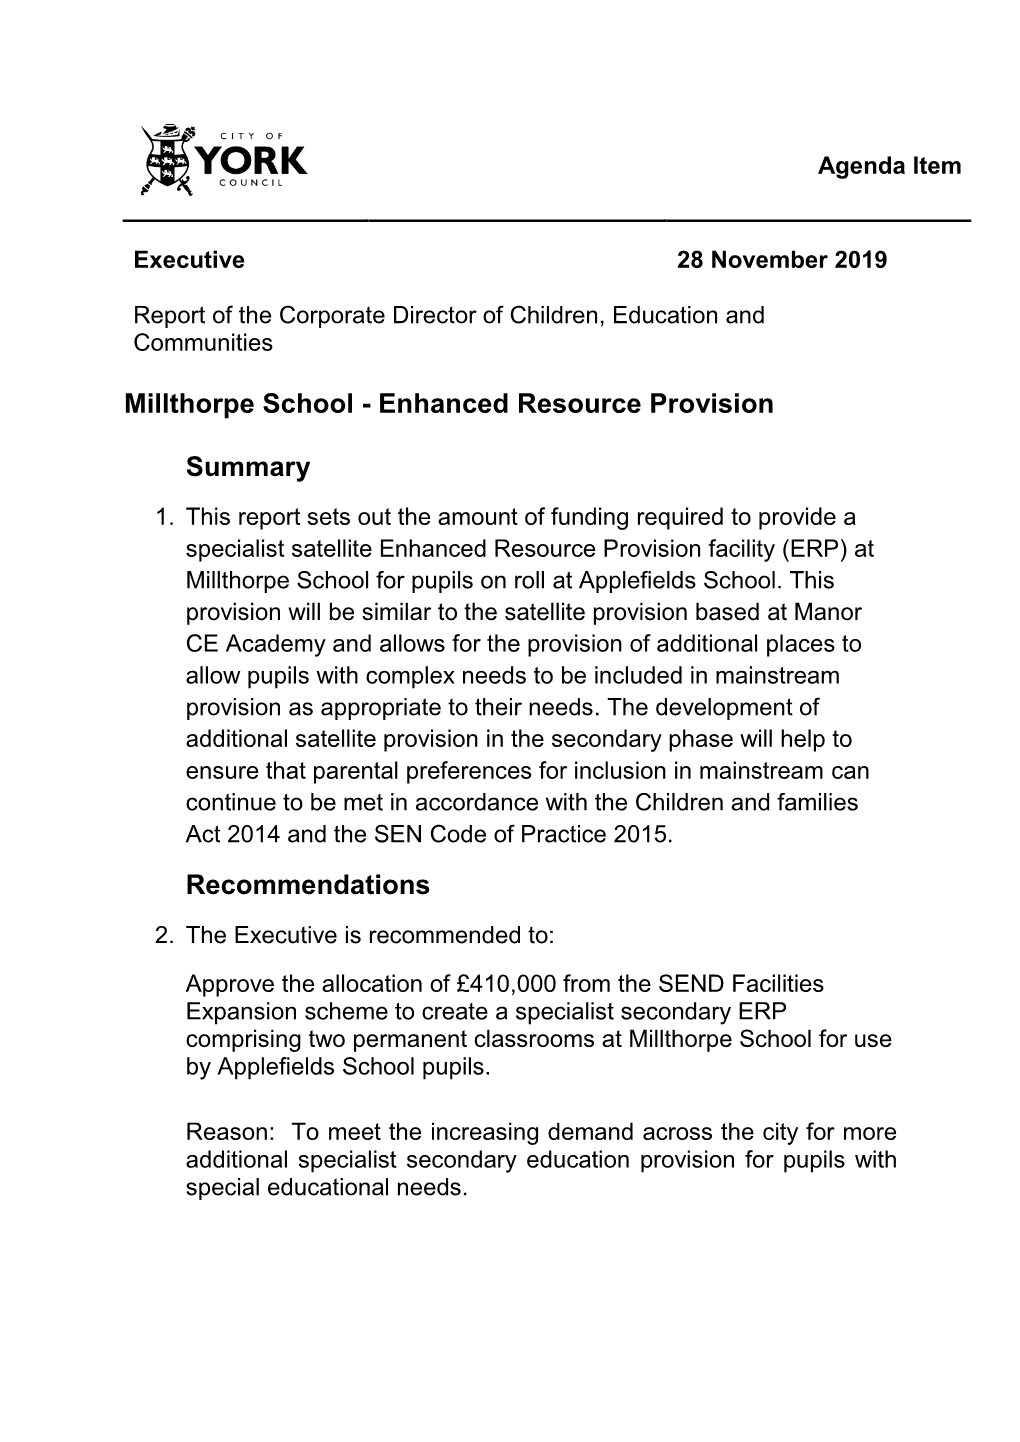 Millthorpe School - Enhanced Resource Provision